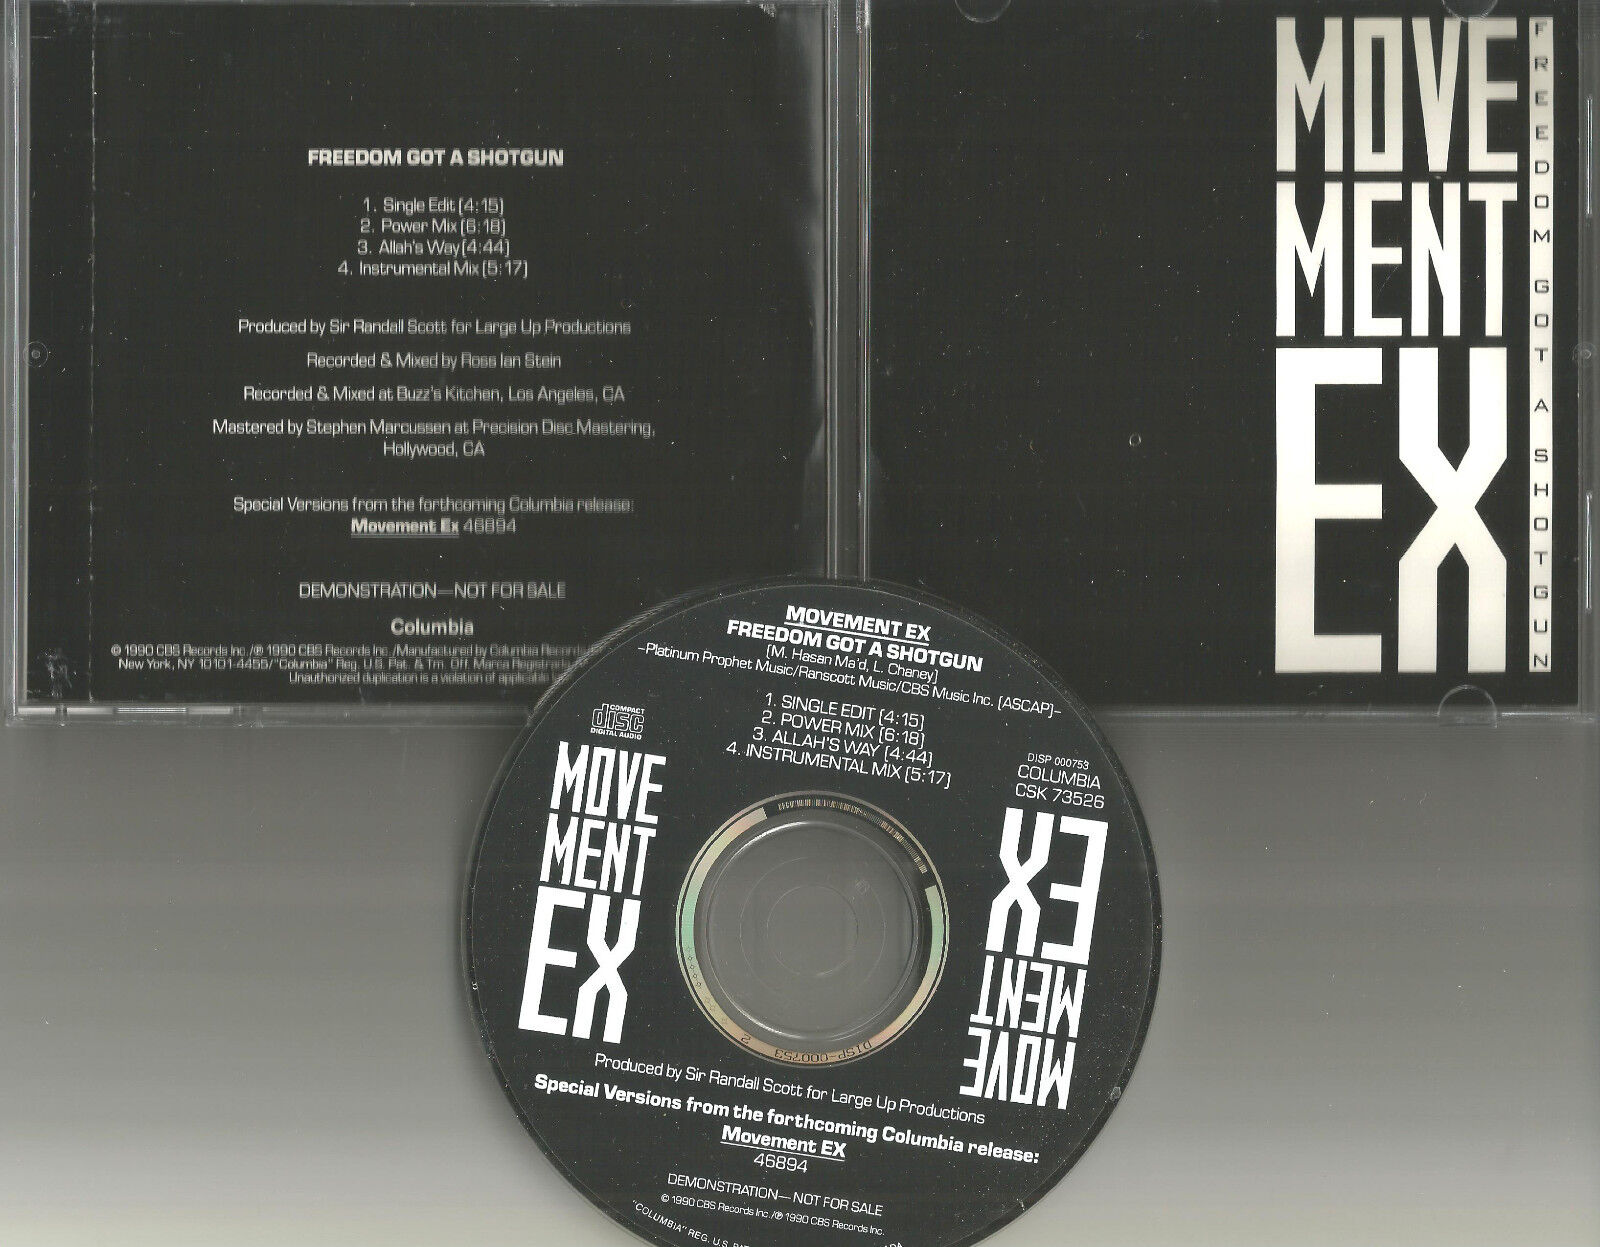 MOVEMENT EX Freedom got a Shotgun 4TRX MIXS &EDIT & INSTRUMENTAL PROMO CD single